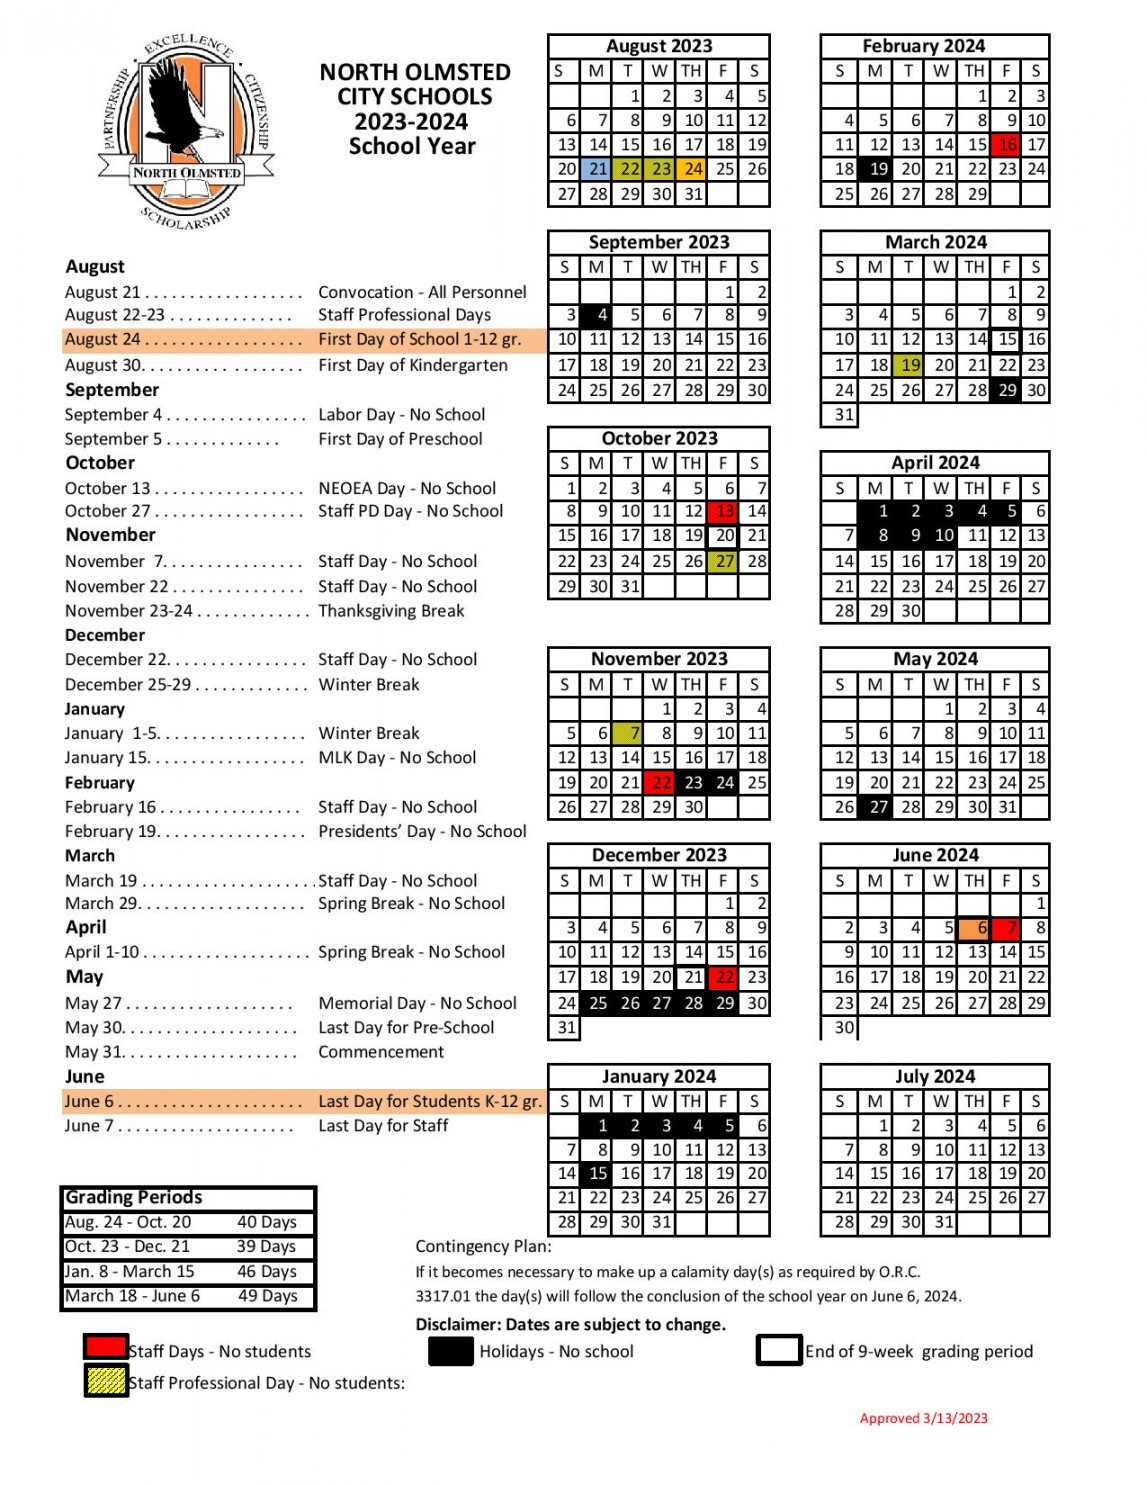 North Olmsted City Schools Calendar - in PDF